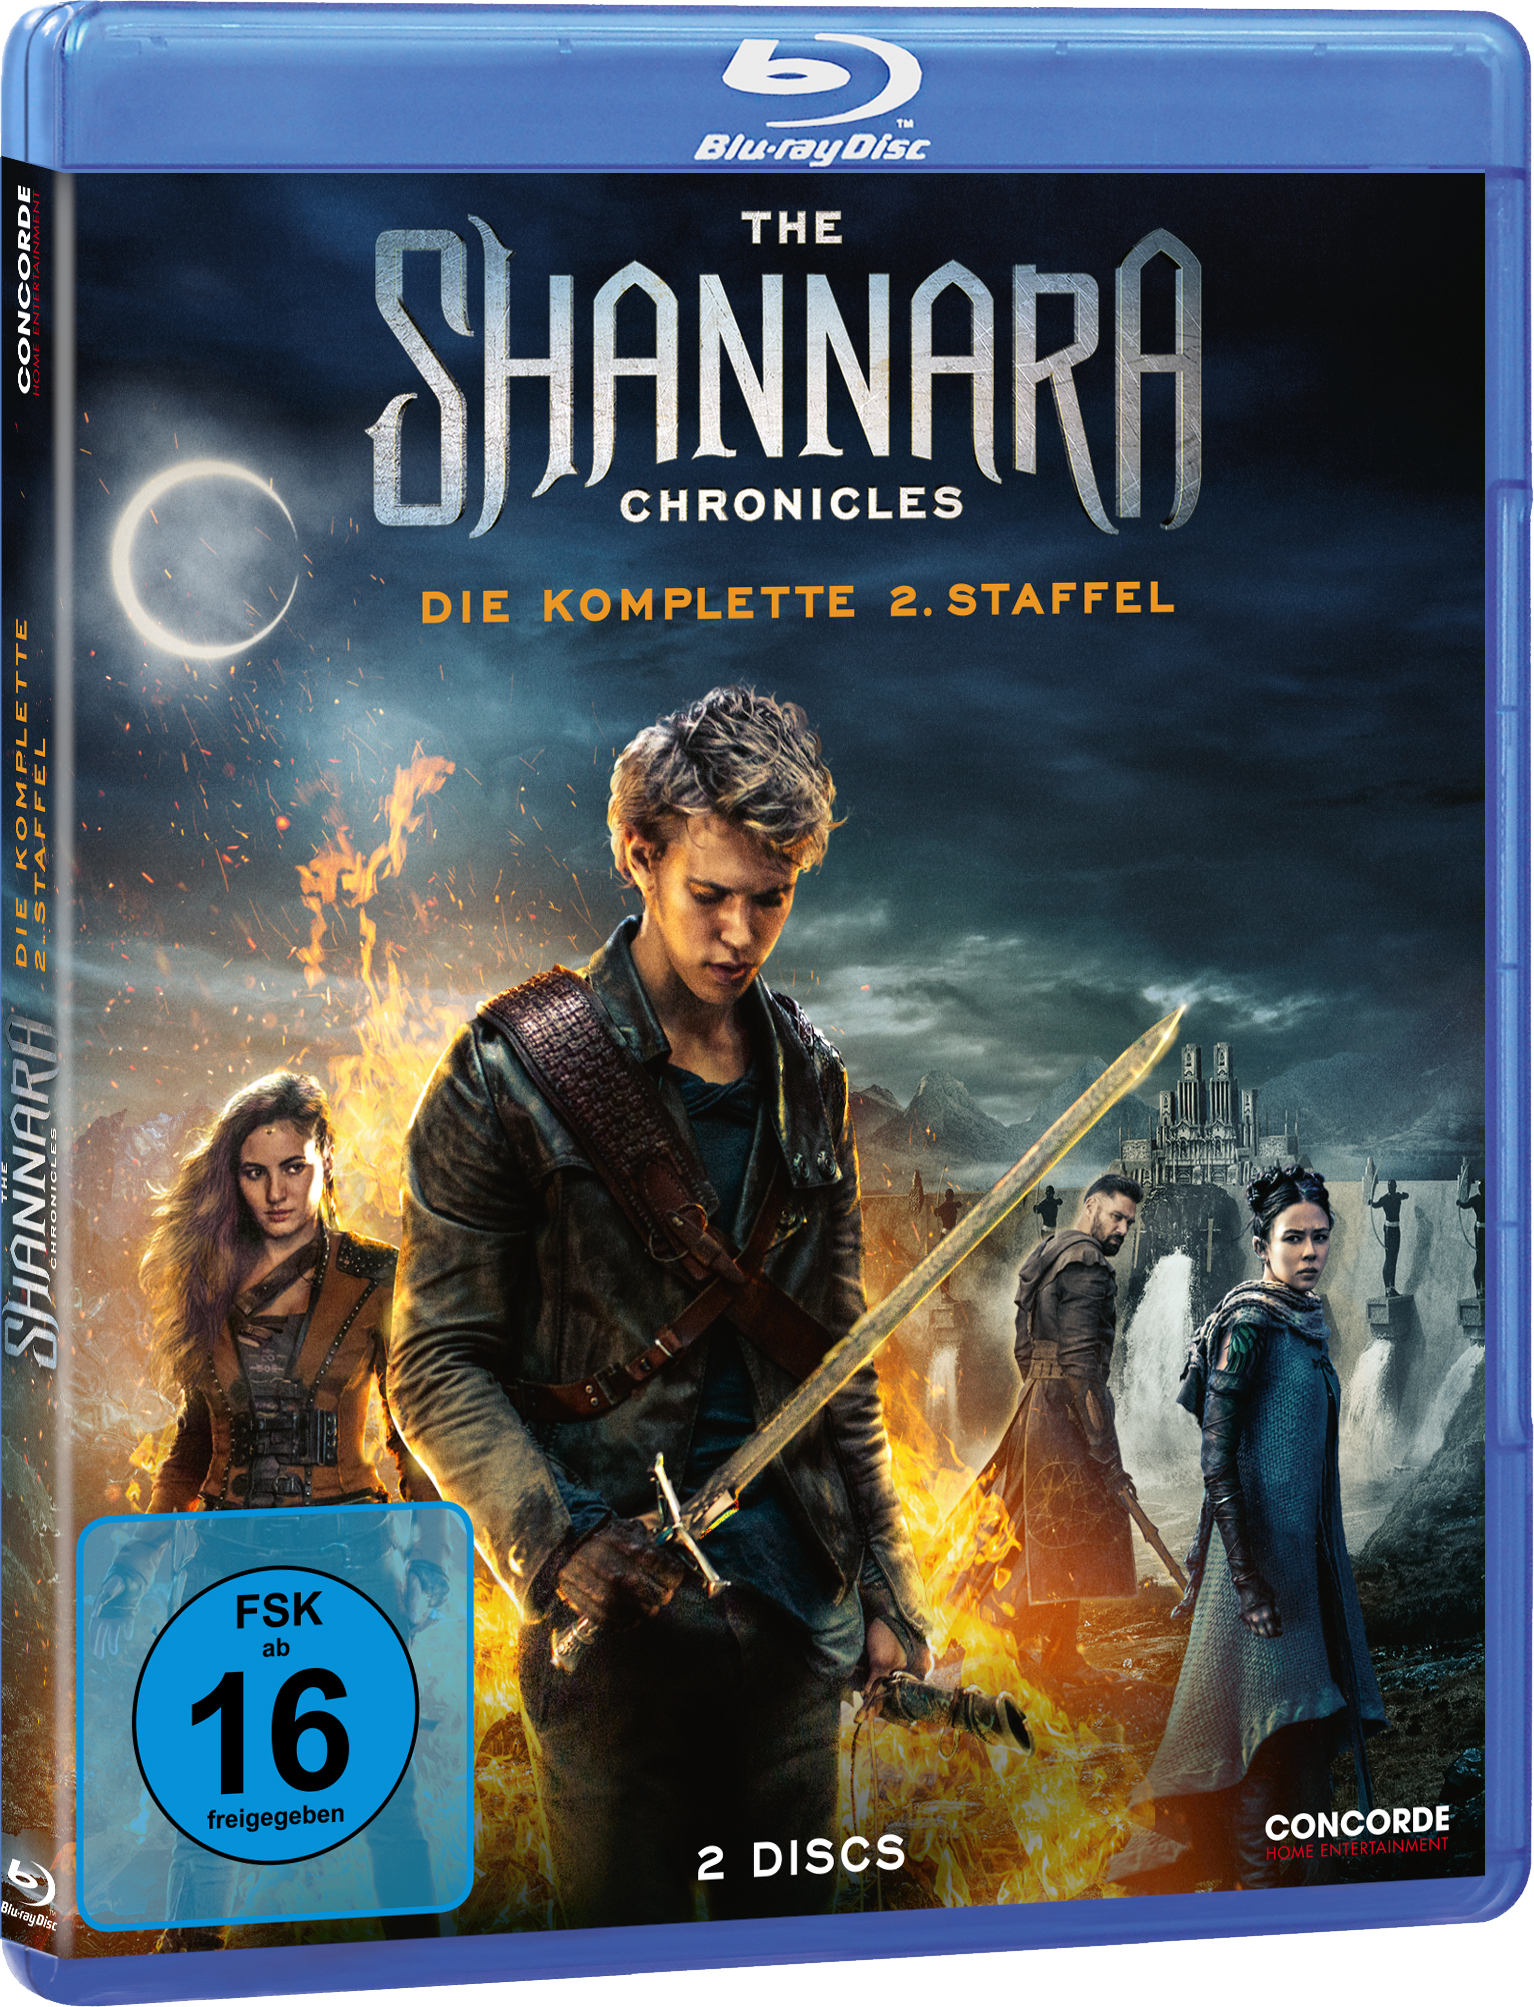 The Staffel Blu-ray 2. Chronicles - Die komplette Shannara